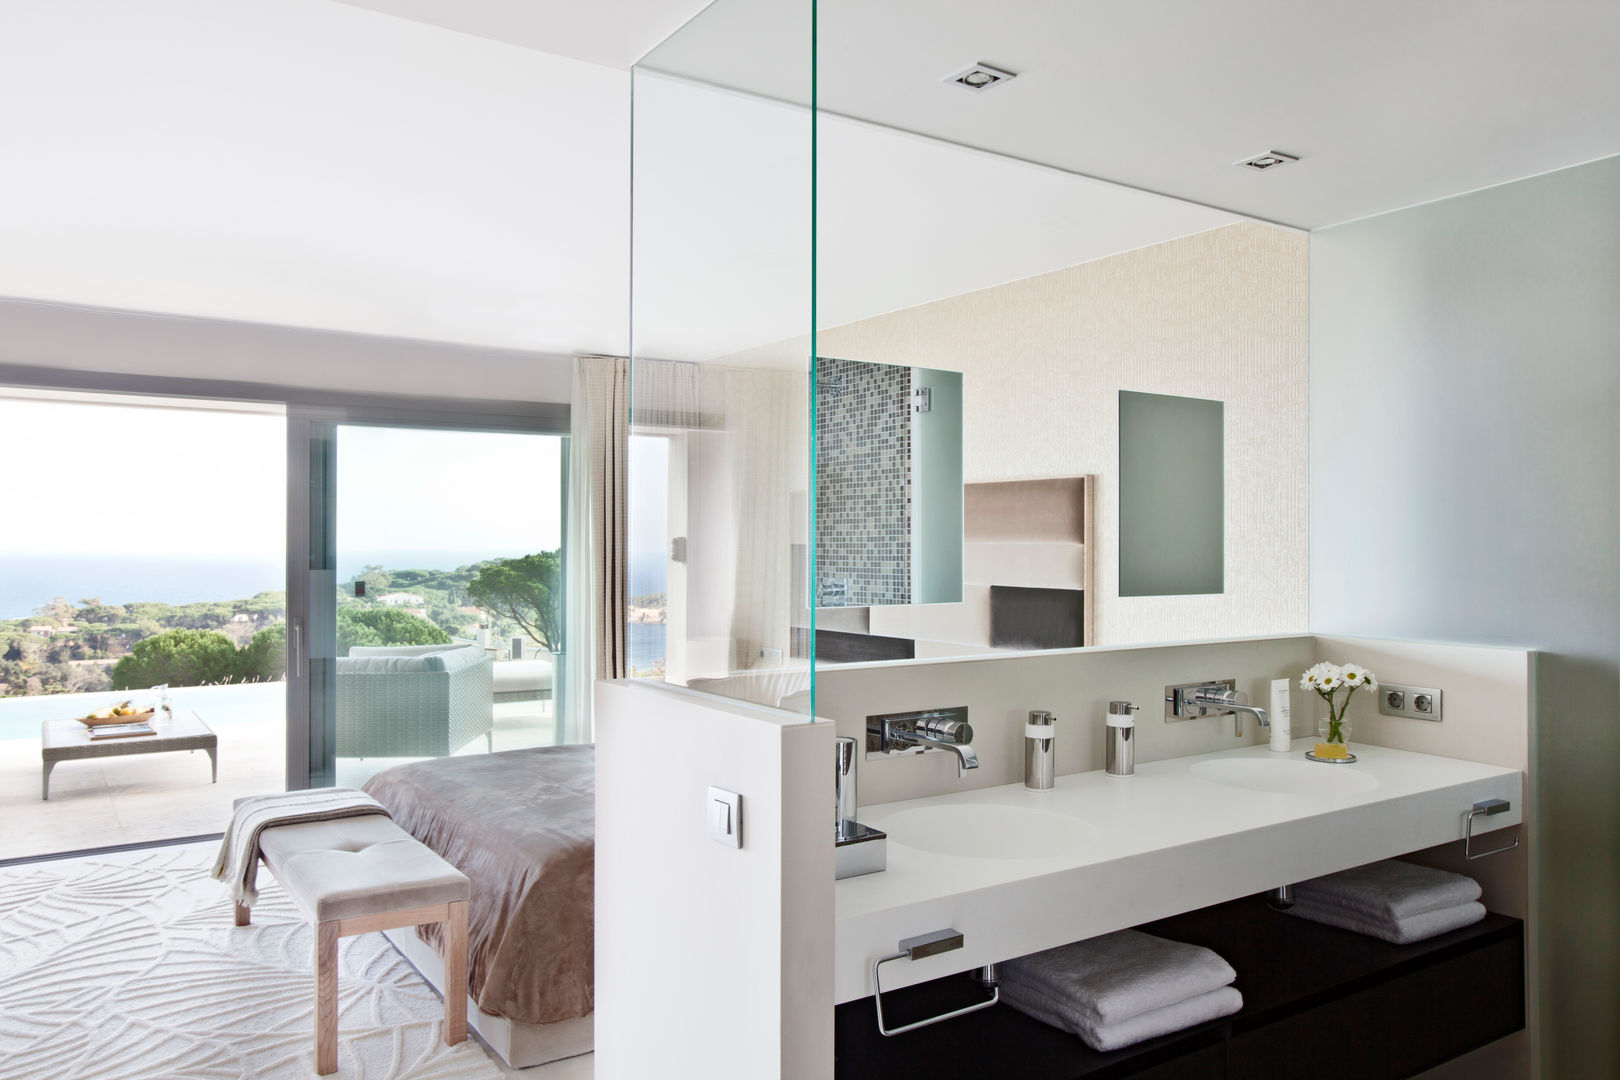 Дом в Сагаро, Испания, IND Archdesign IND Archdesign Mediterranean style bathroom